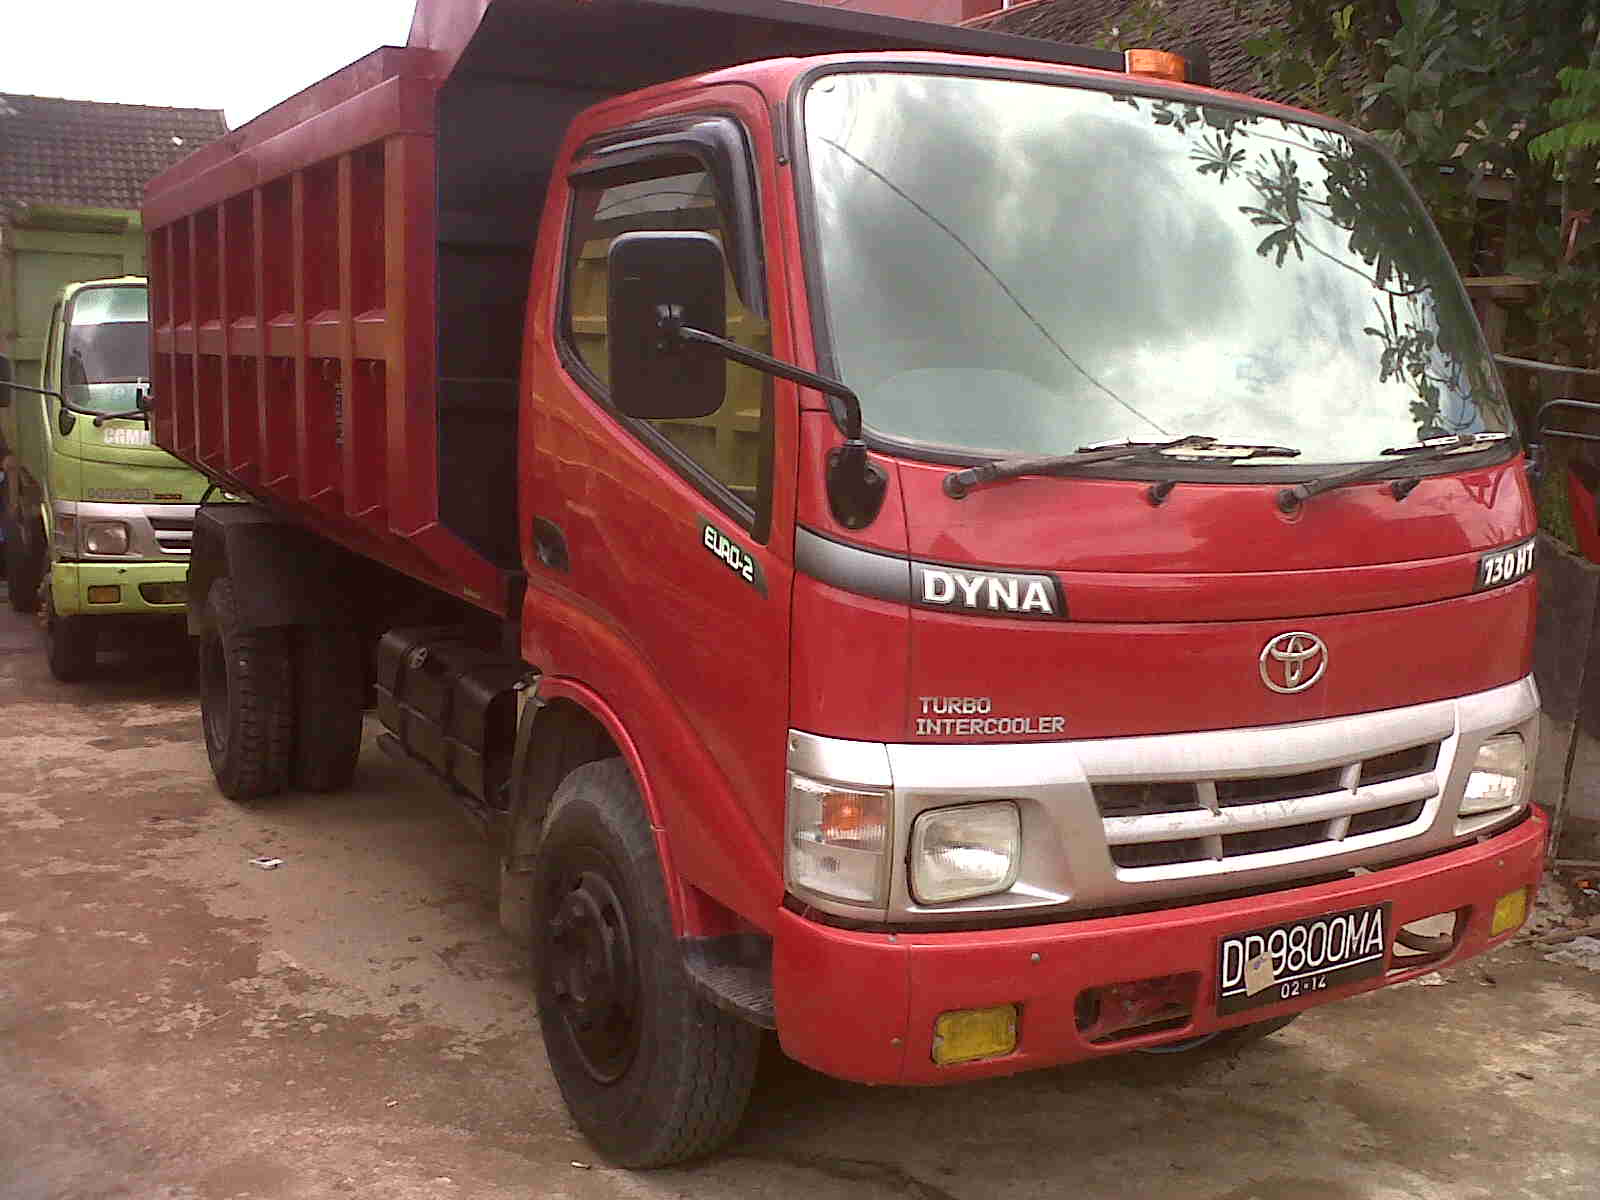 IKLAN BISNIS SAMARINDA Dijual Dump  Truck Toyota Dyna  2008 